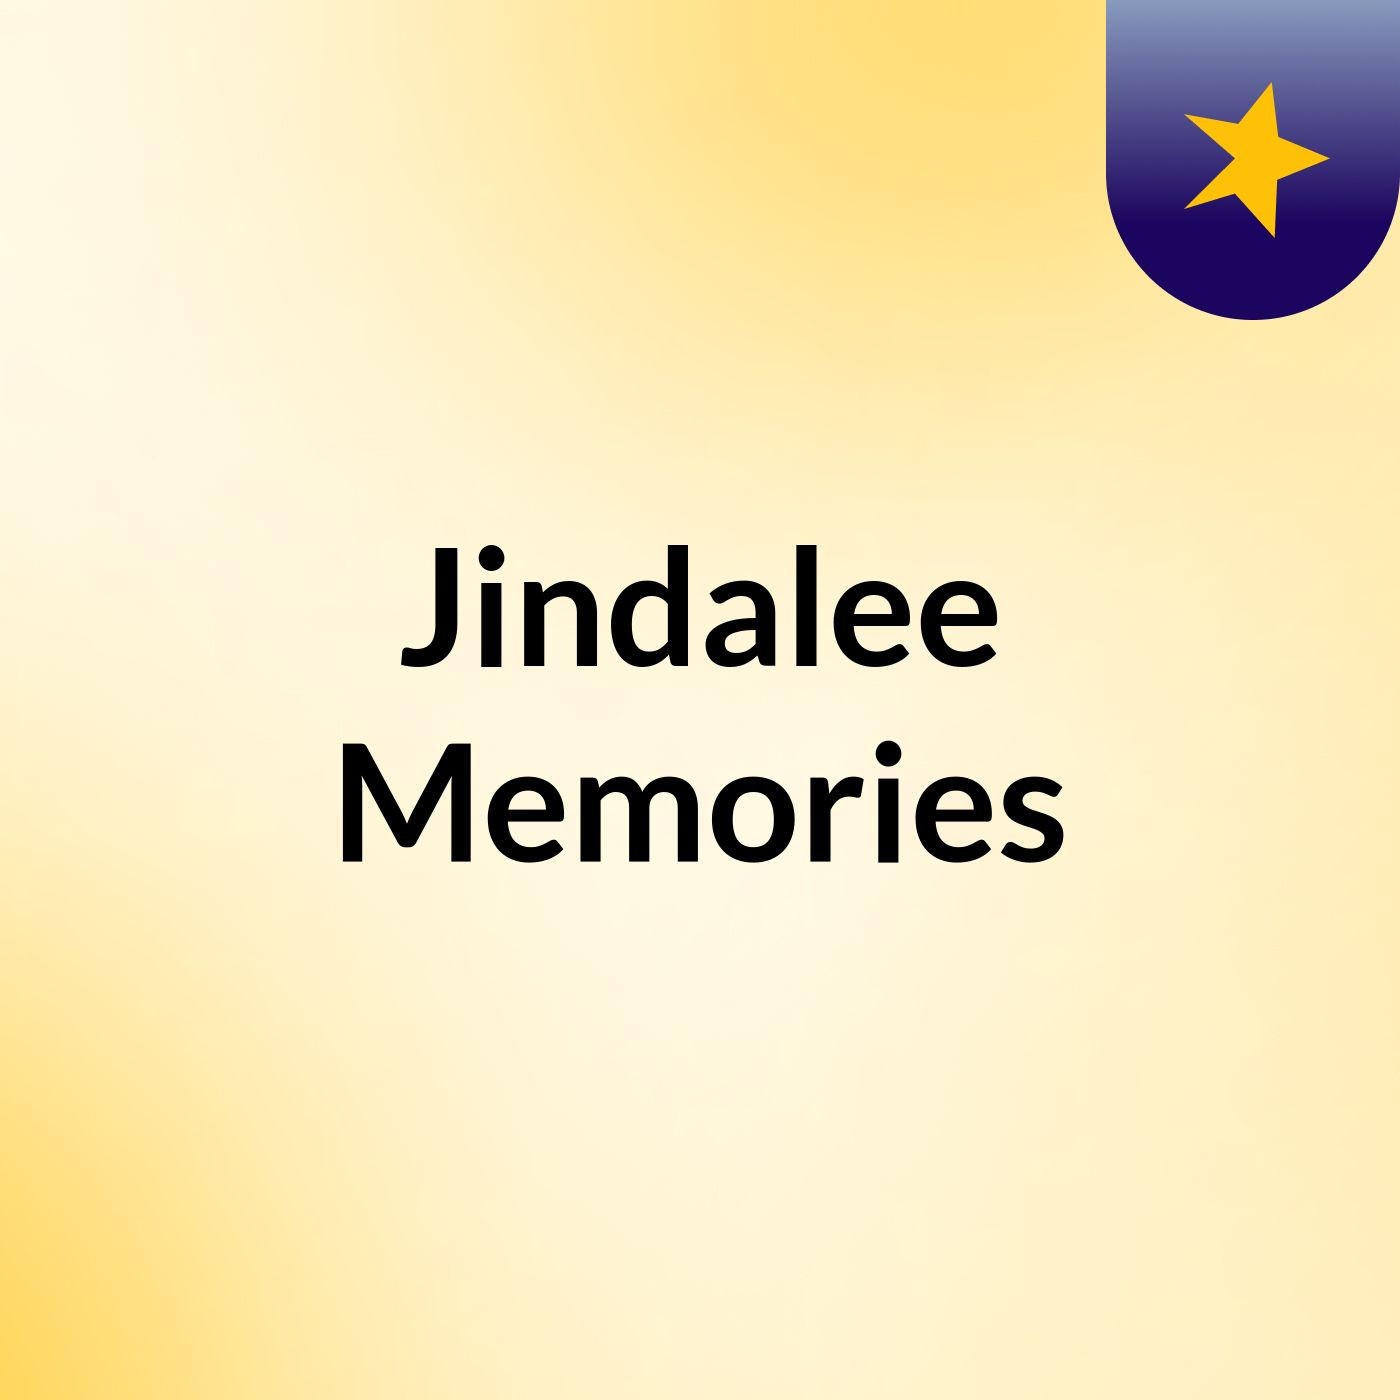 Jindalee hills